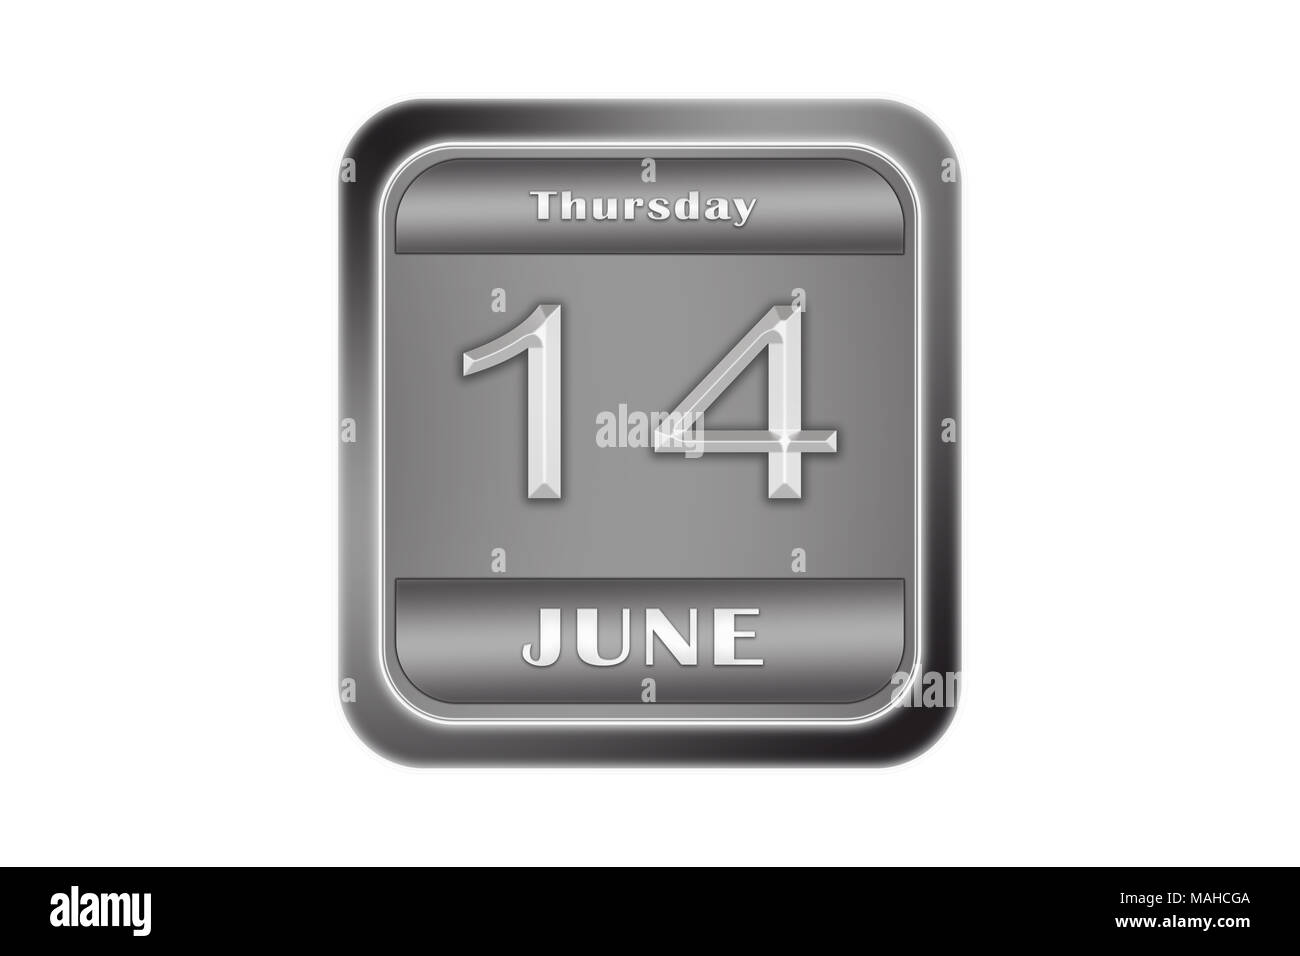 Date 14 June, Thursday written on a metal plate Stock Photo